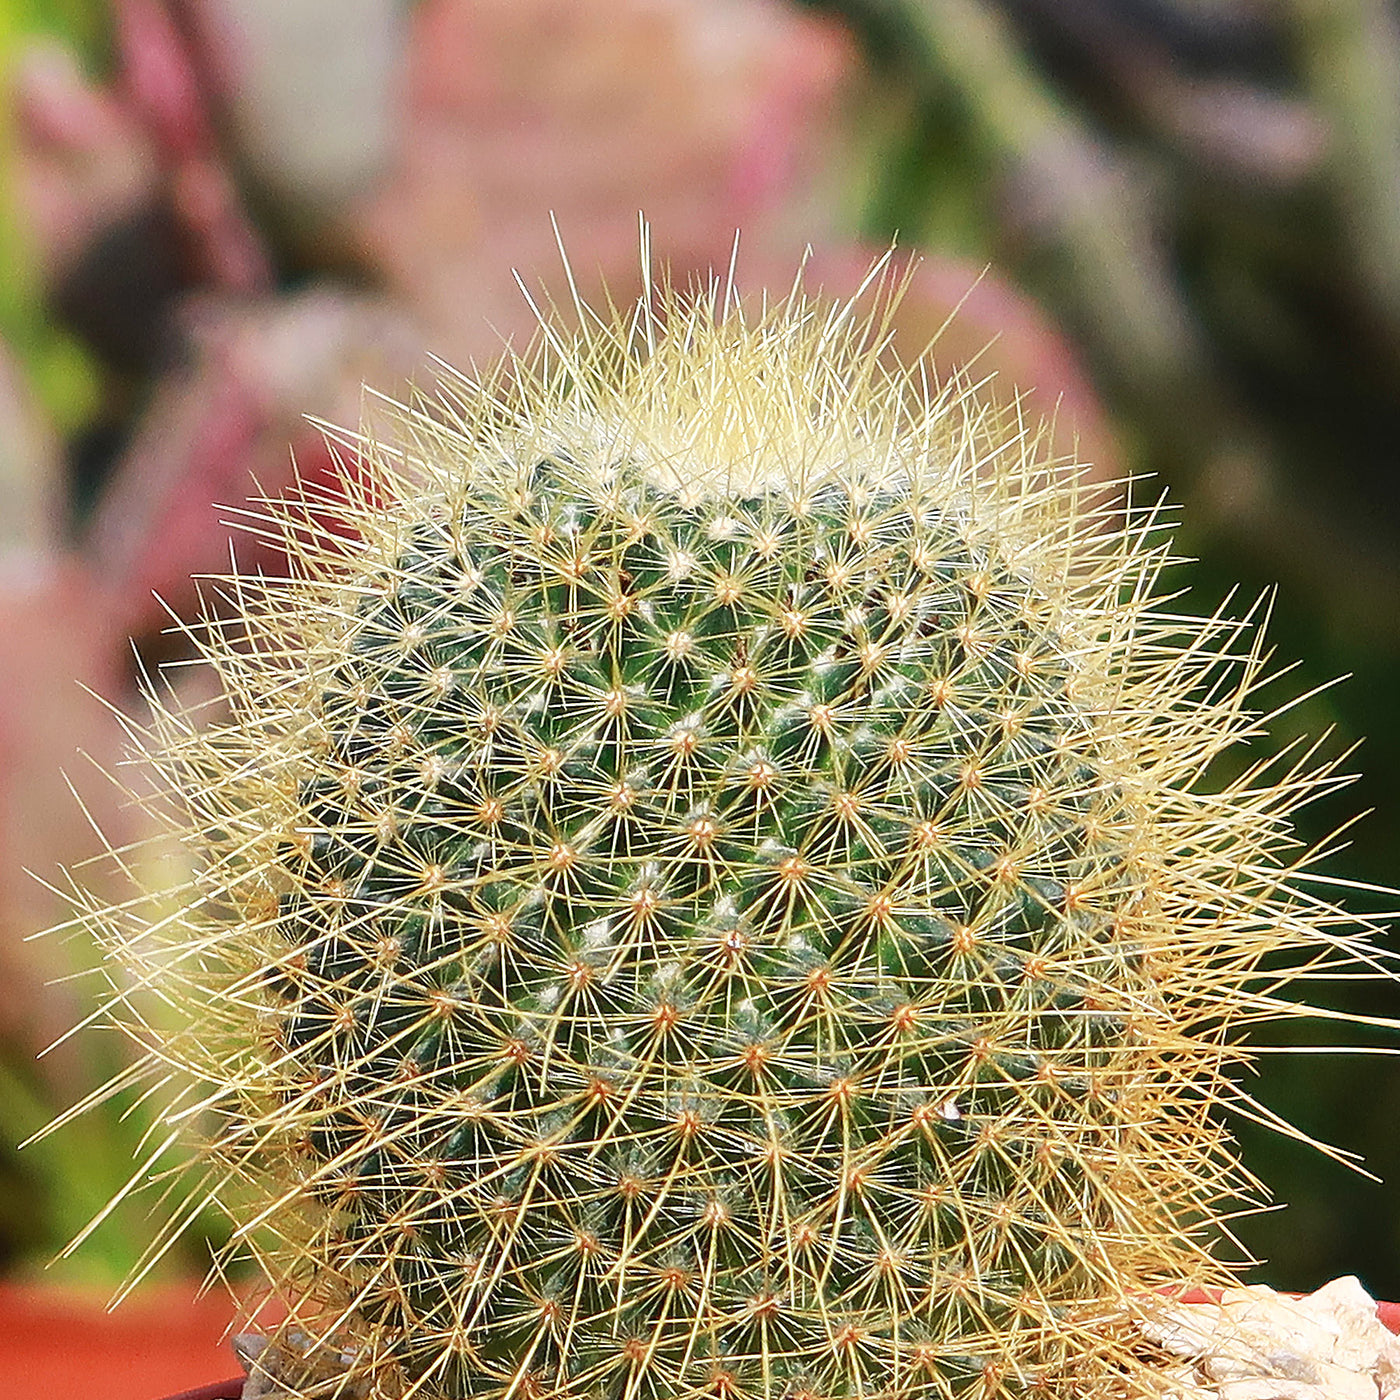 Lemon Ball Cactus - Mammillaria pringlei